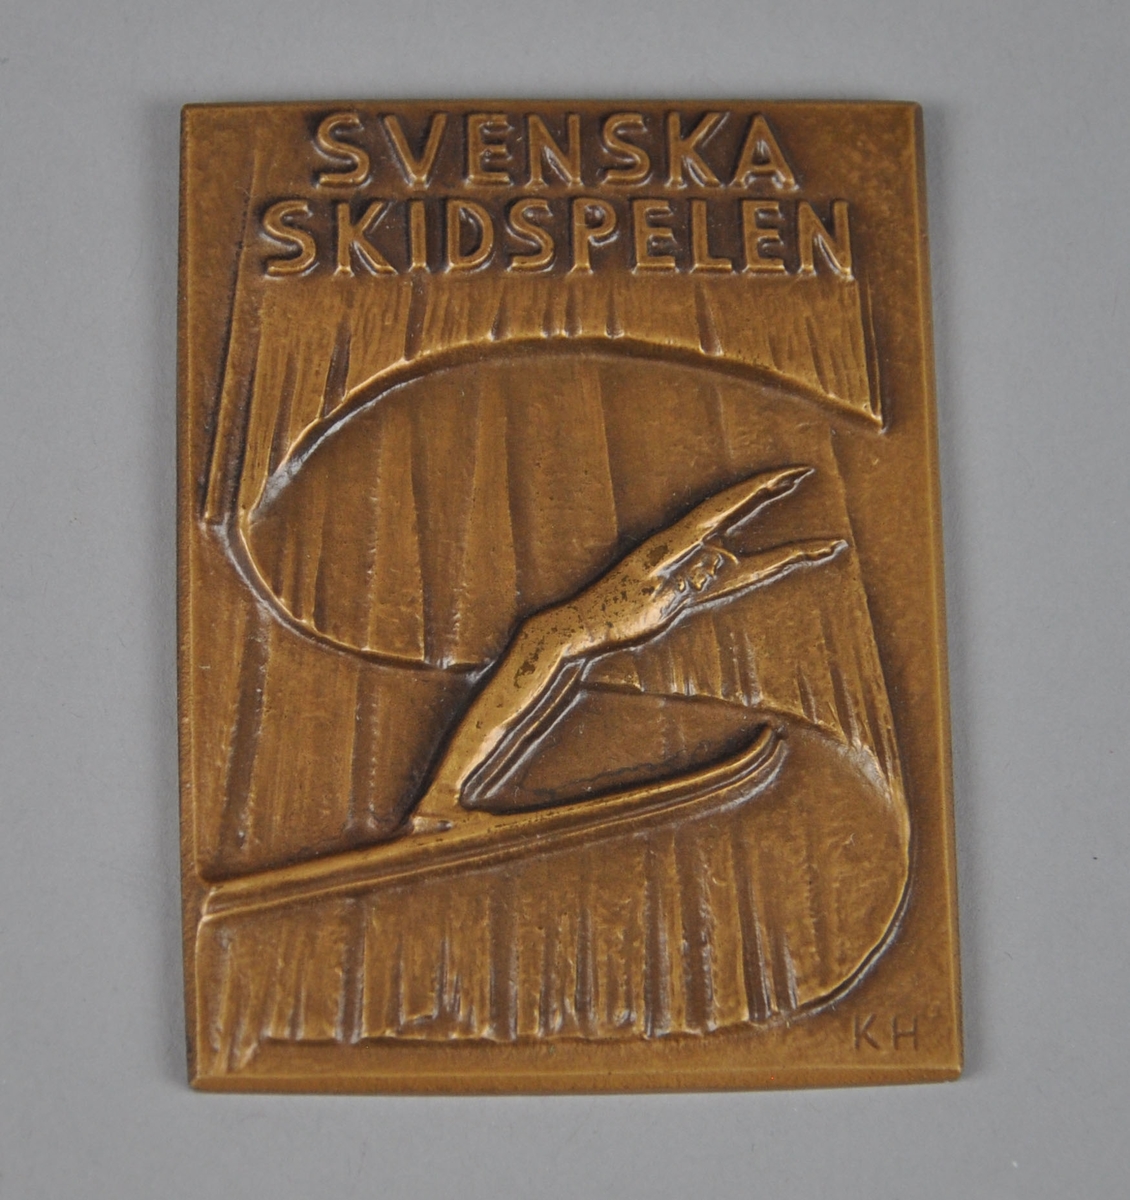 Medalje i bronse merket Svenska Skidspelen